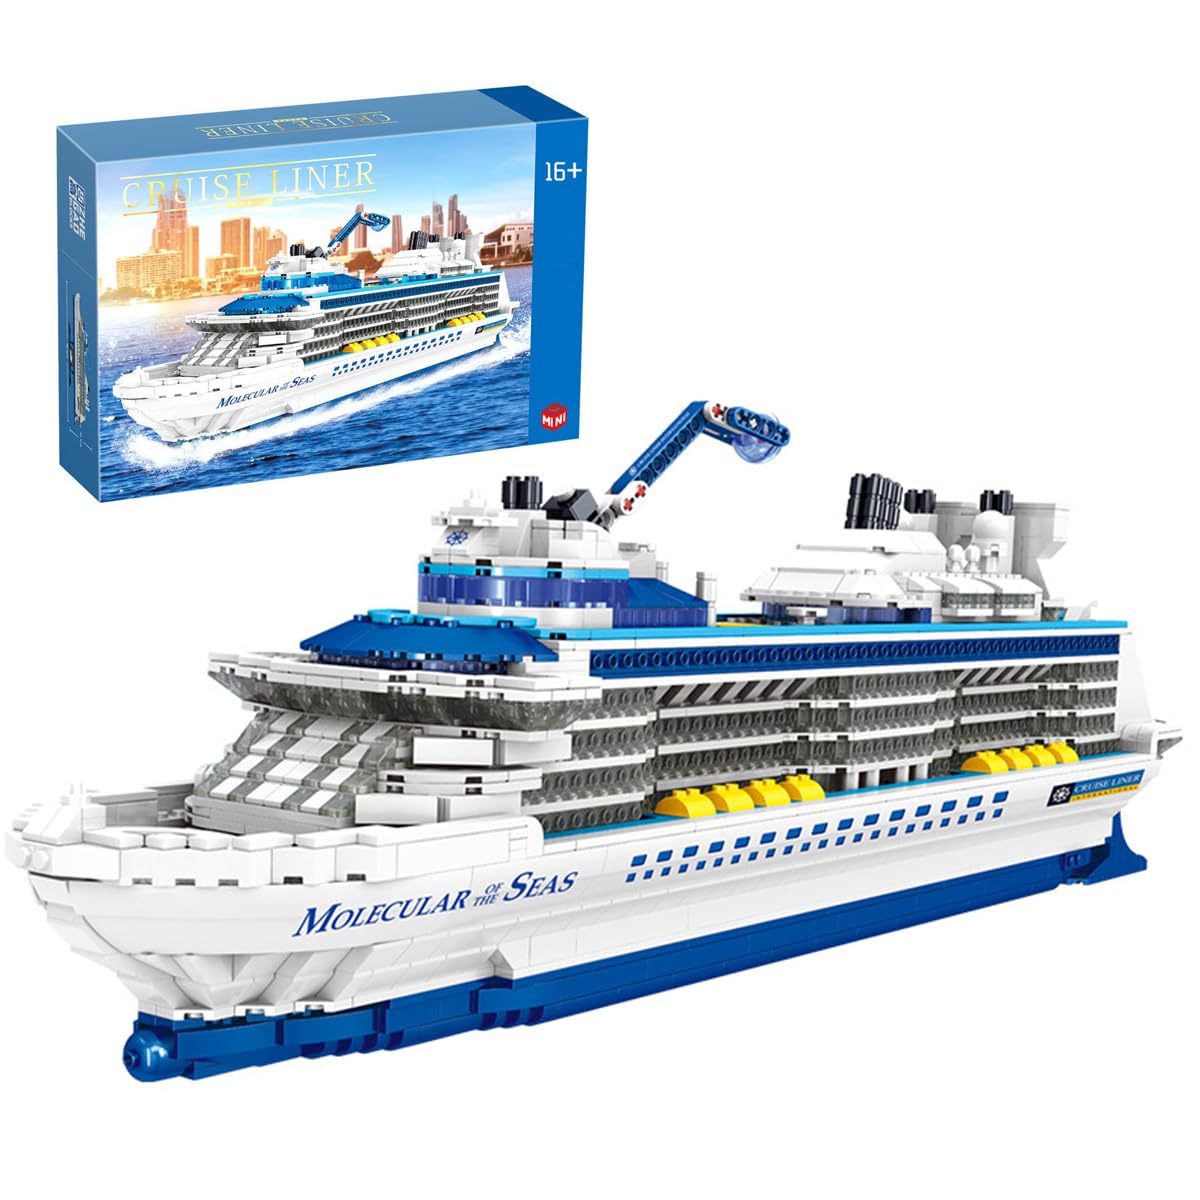 FULHOLPE Technic Cruise Ship Building Blocks Set MOC Boat Molecular of The Seas Model Bricks Construction Toy - 2428 Pieces